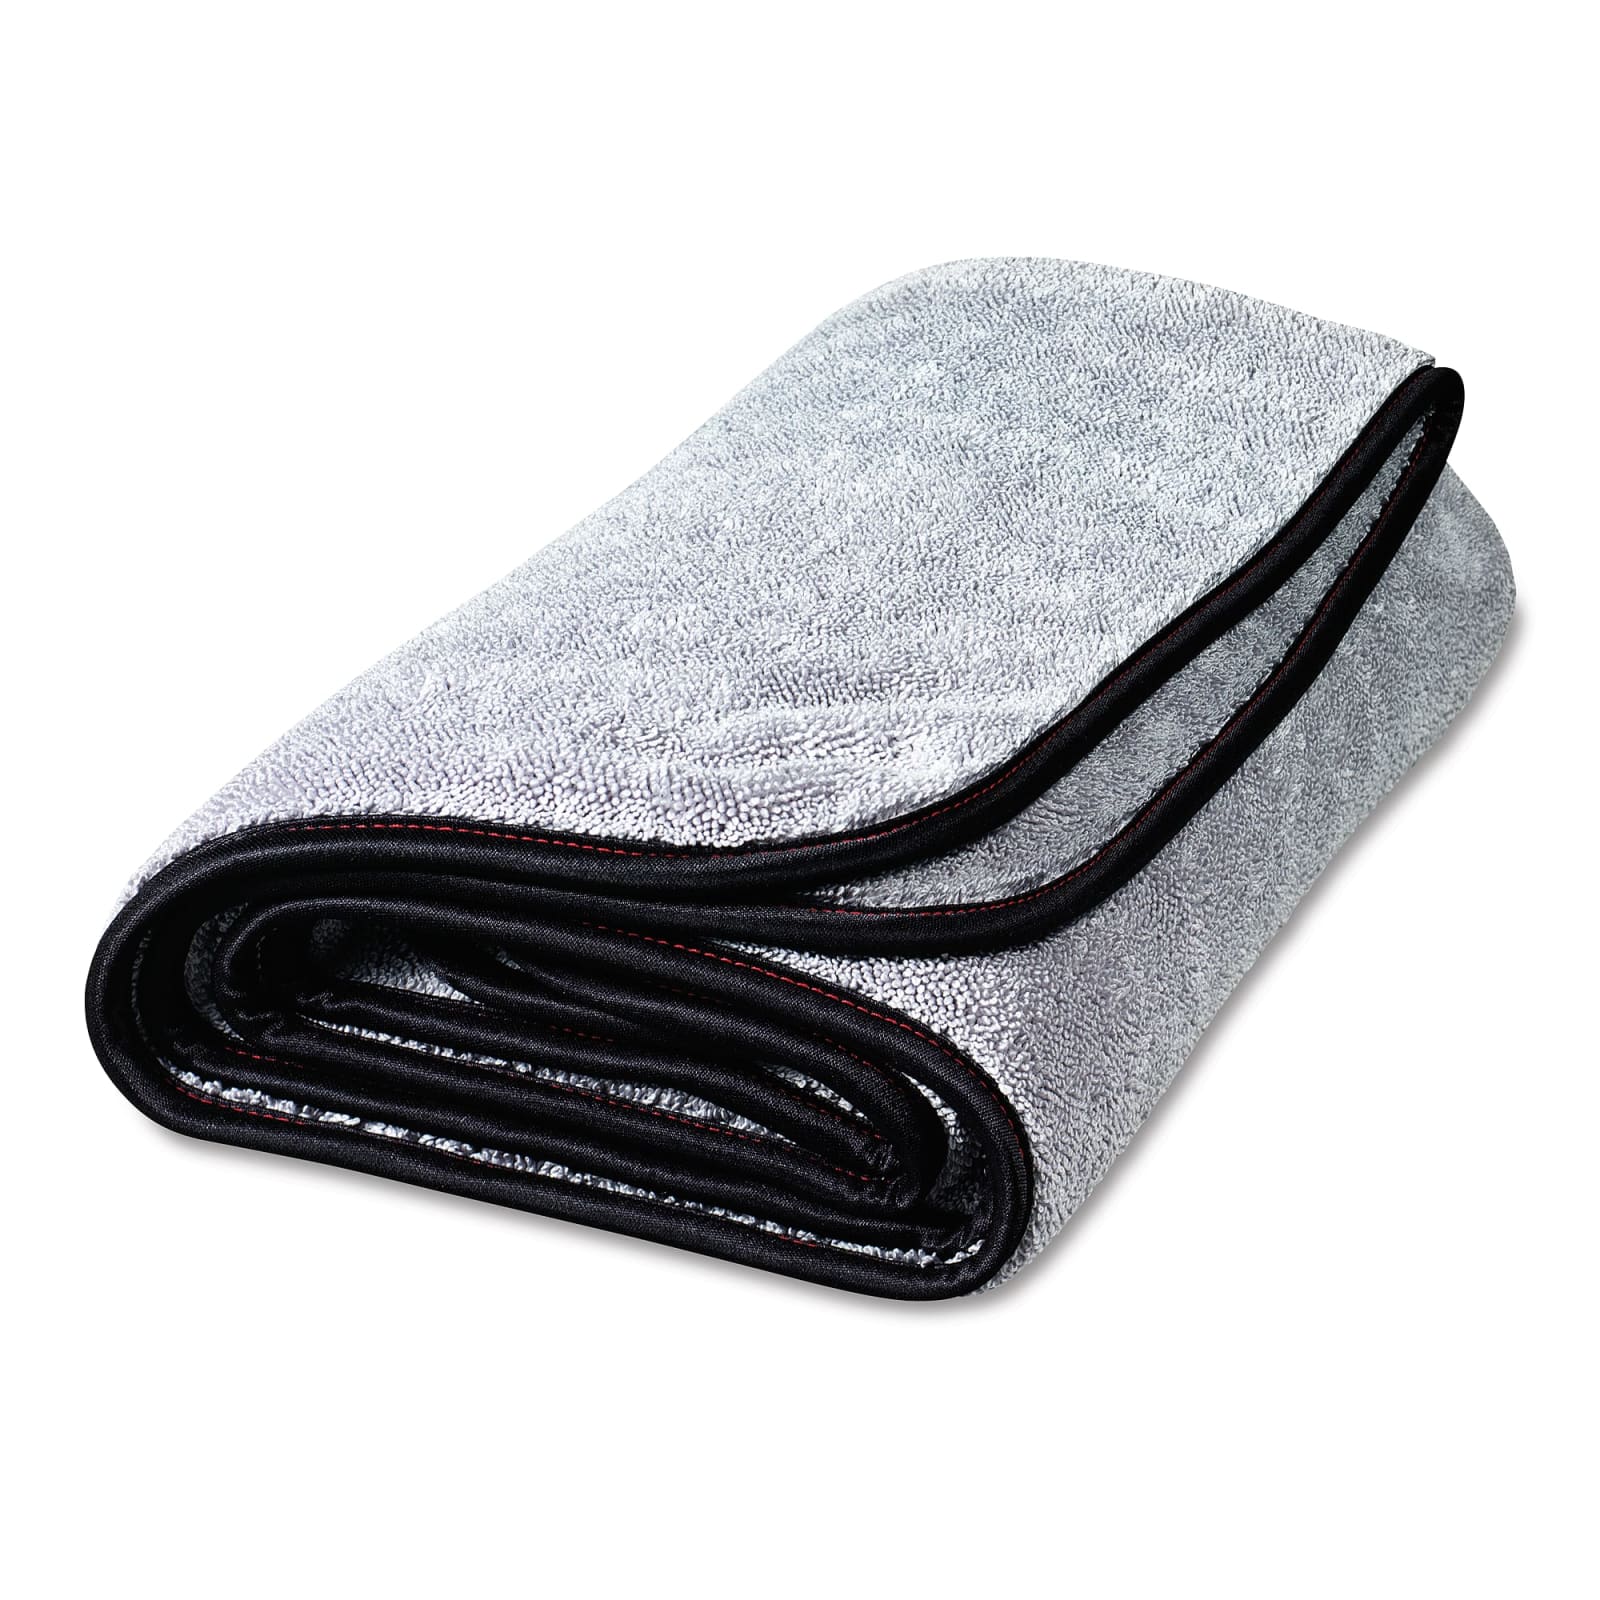 Chemical Guys Woolly Mammoth Microfiber Drying Towel